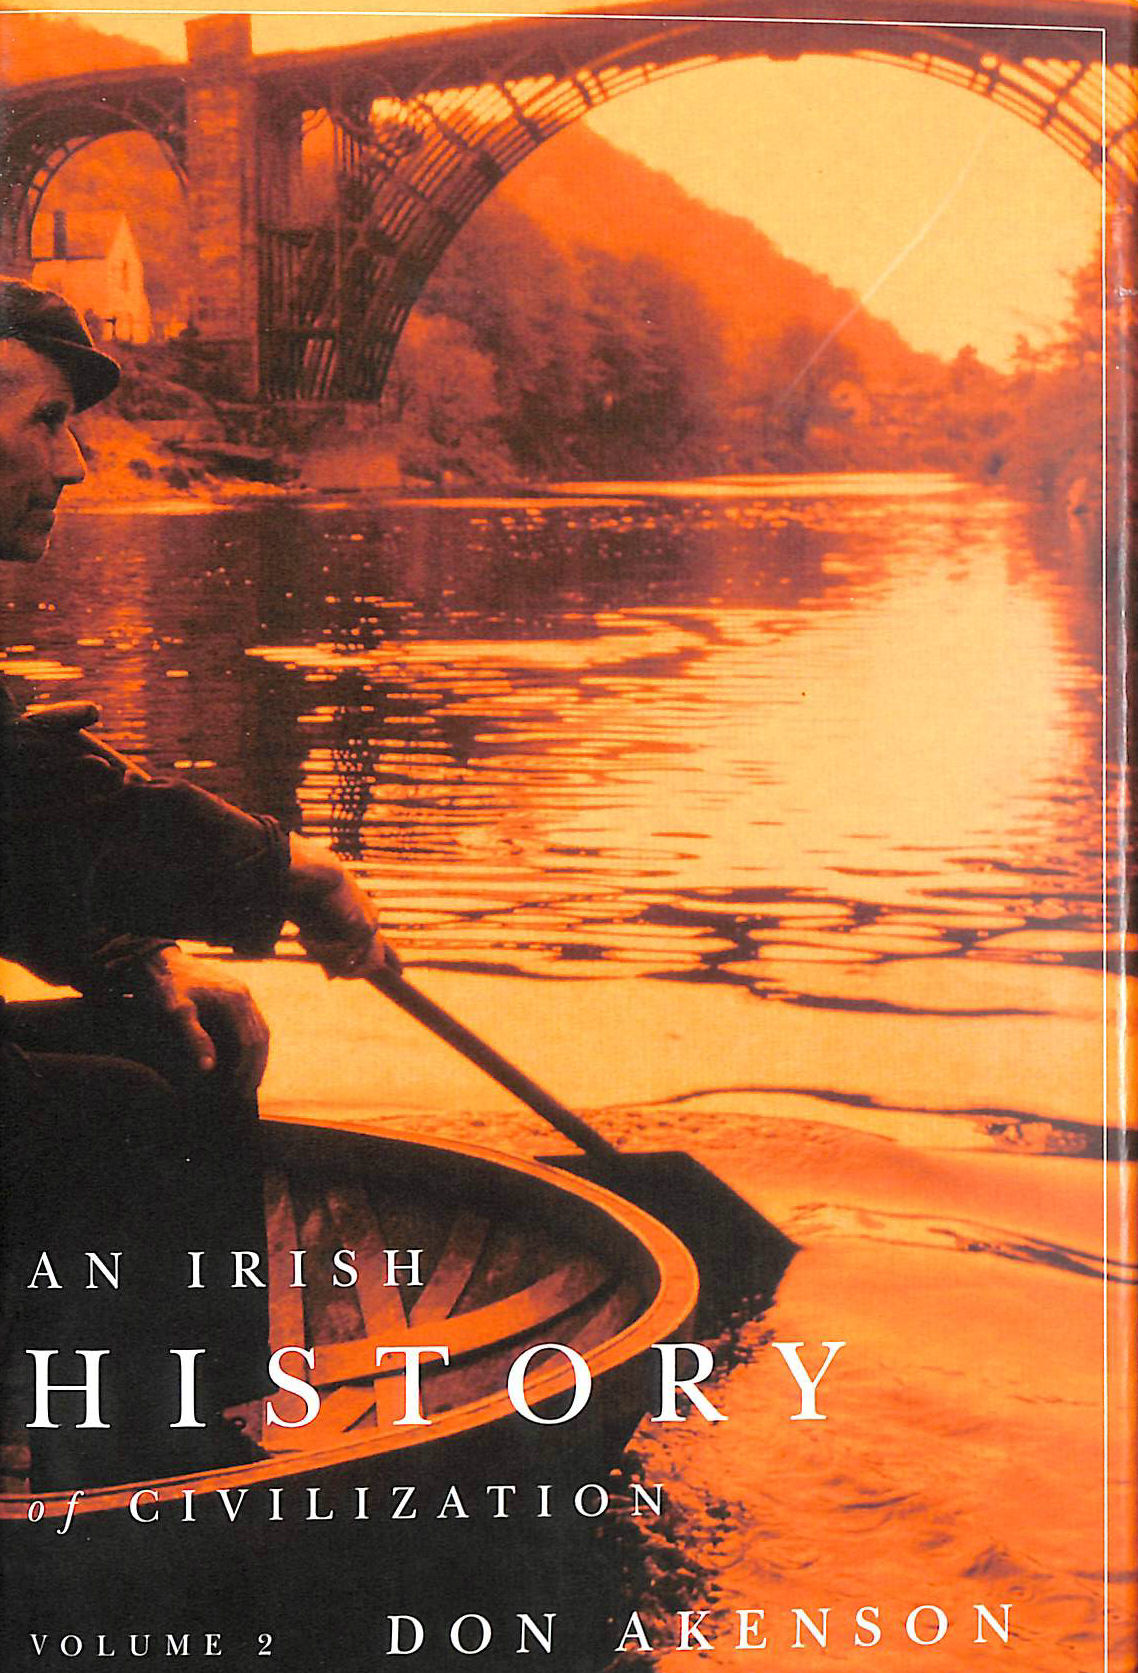 DON AKENSON - An Irish History of Civilization: Vol 2: Comprising Books 3 and 4